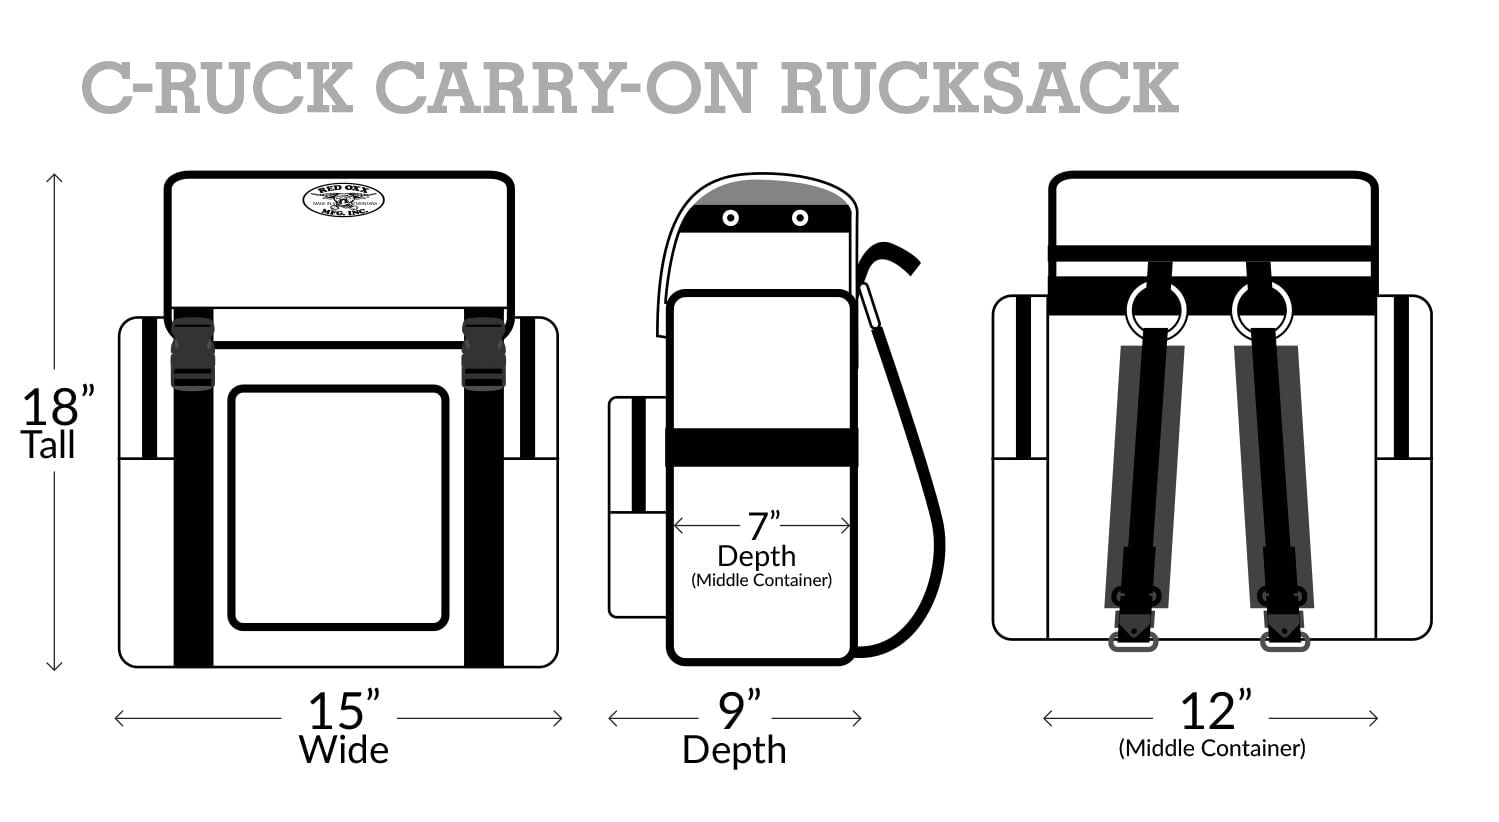 C-ruck Carry-on Rucksack